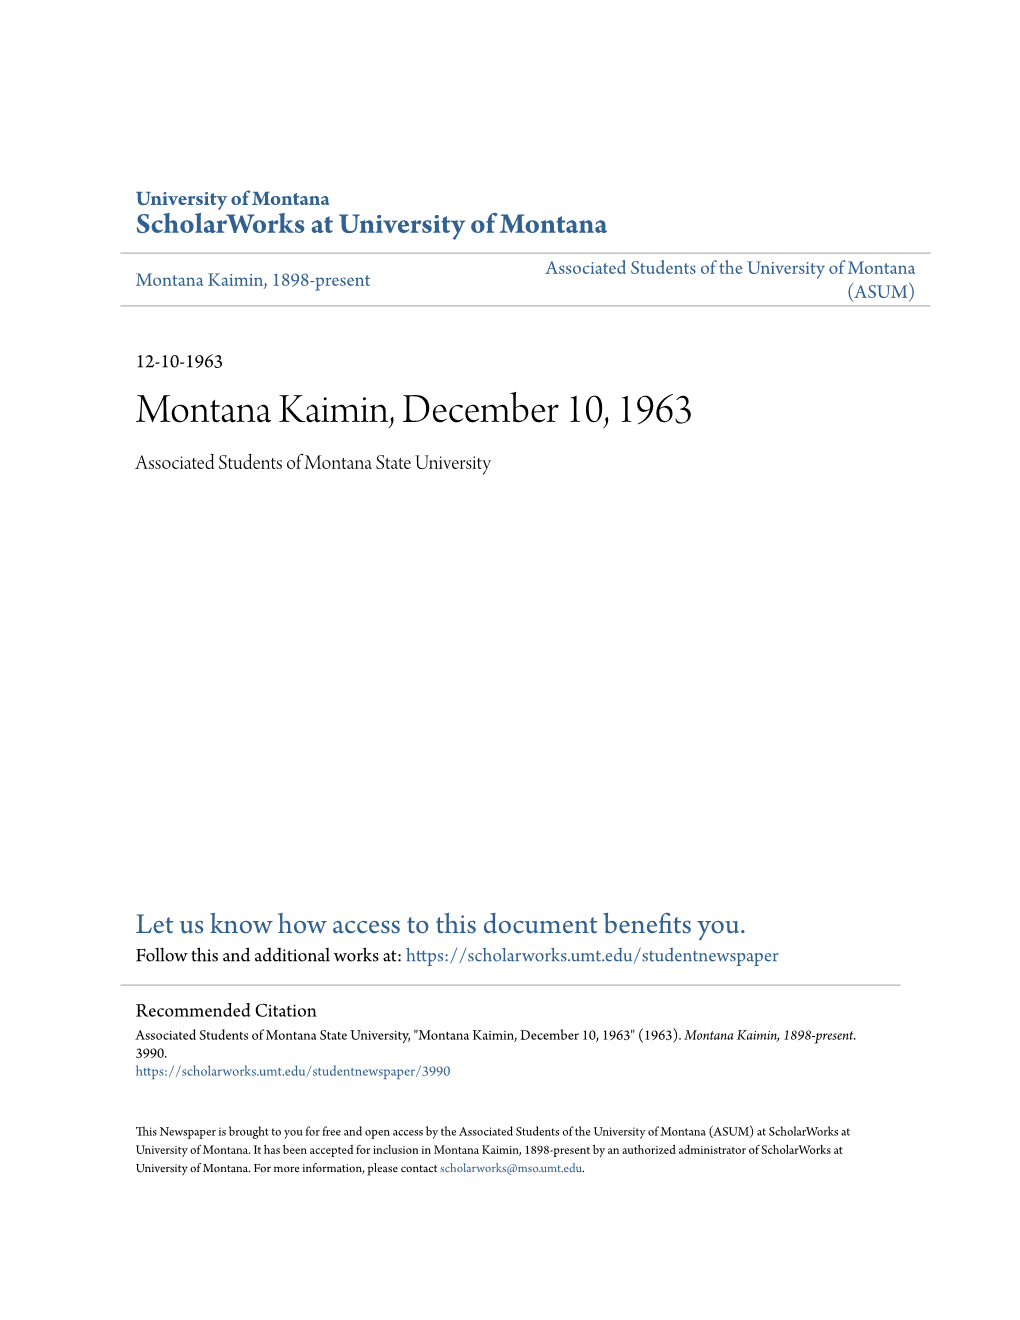 Montana Kaimin, December 10, 1963 Associated Students of Montana State University